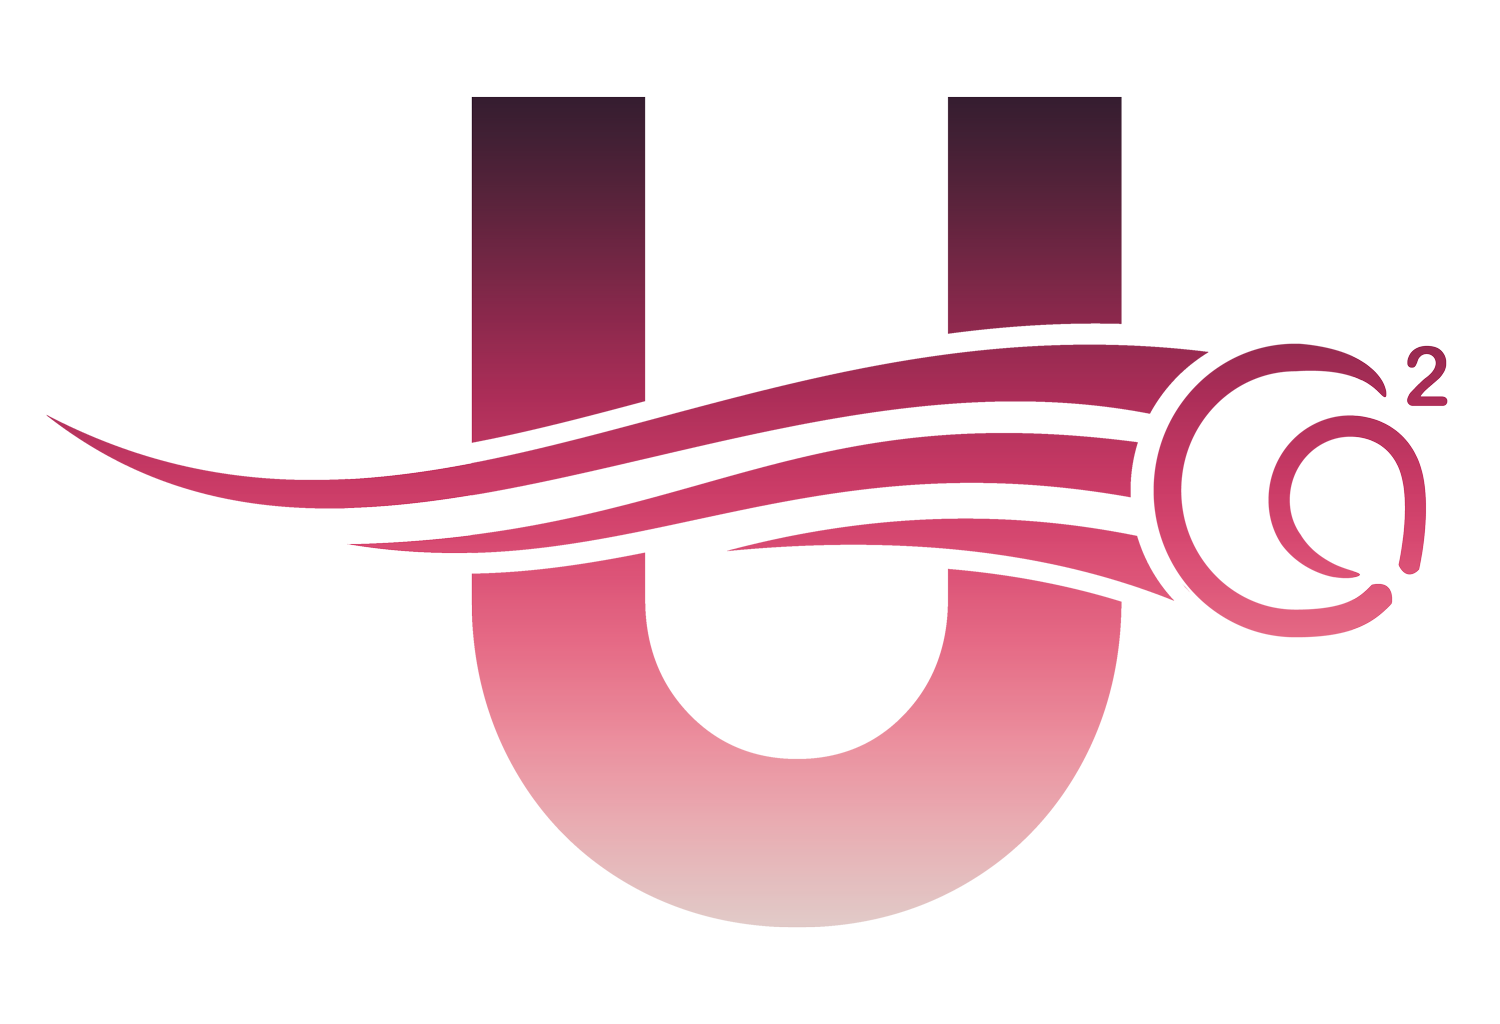 agileuniversity logo web